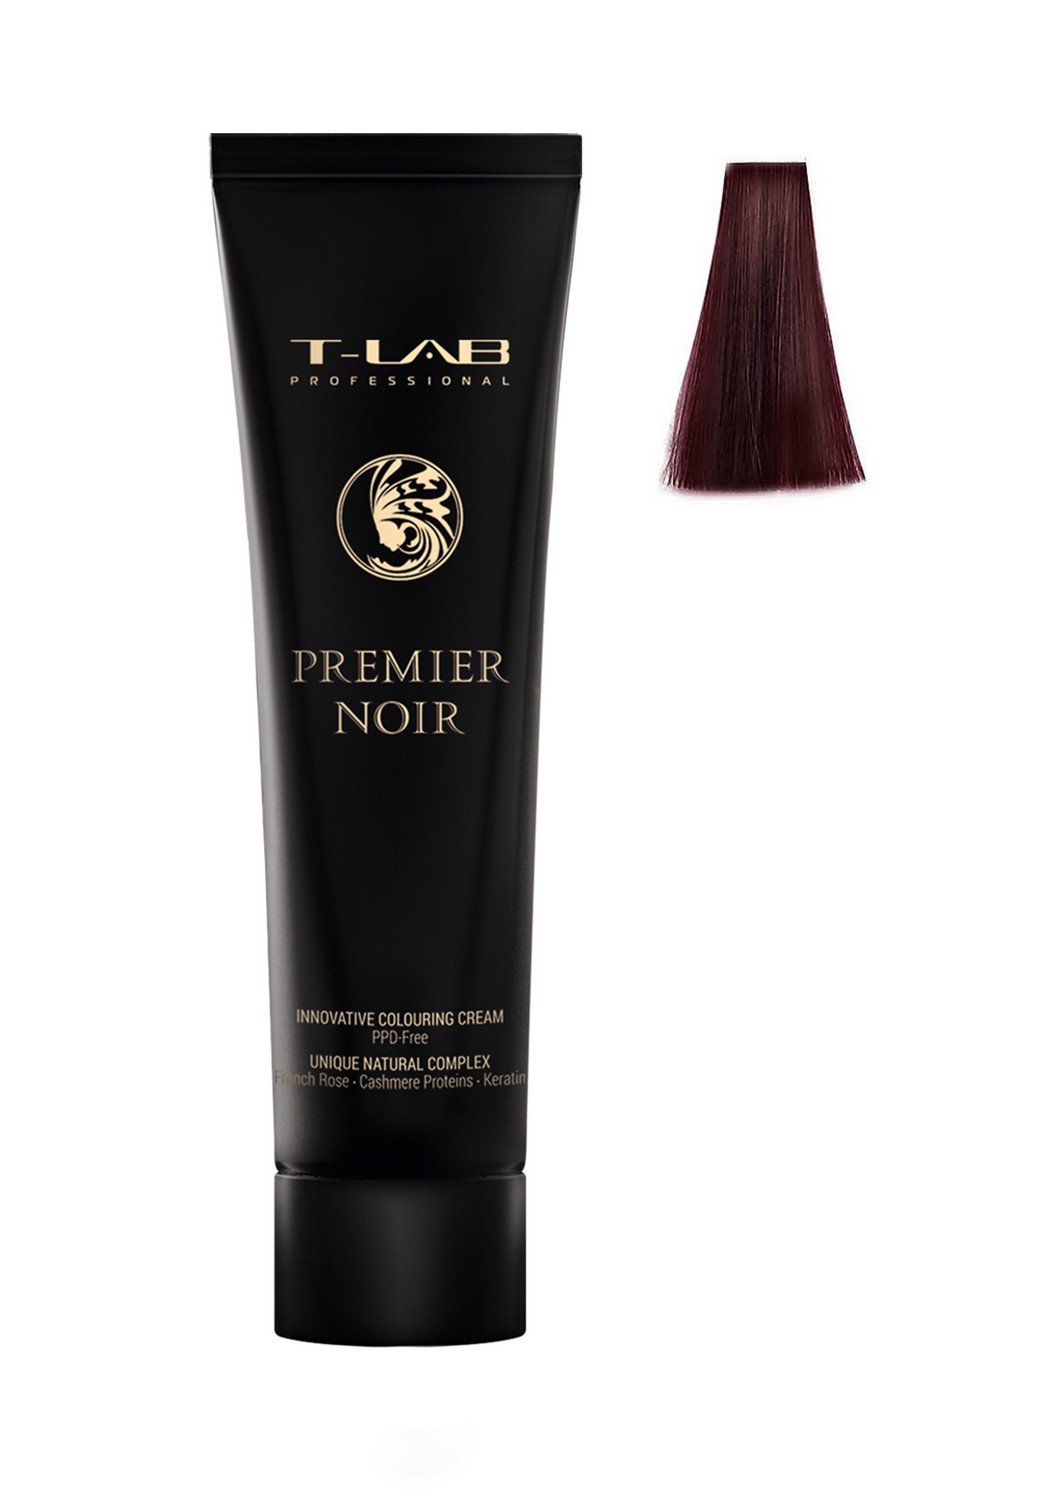 Крем-фарба T-LAB Professional Premier Noir colouring cream, відтінок 4.62 (extra red iridescent brow) - фото 2